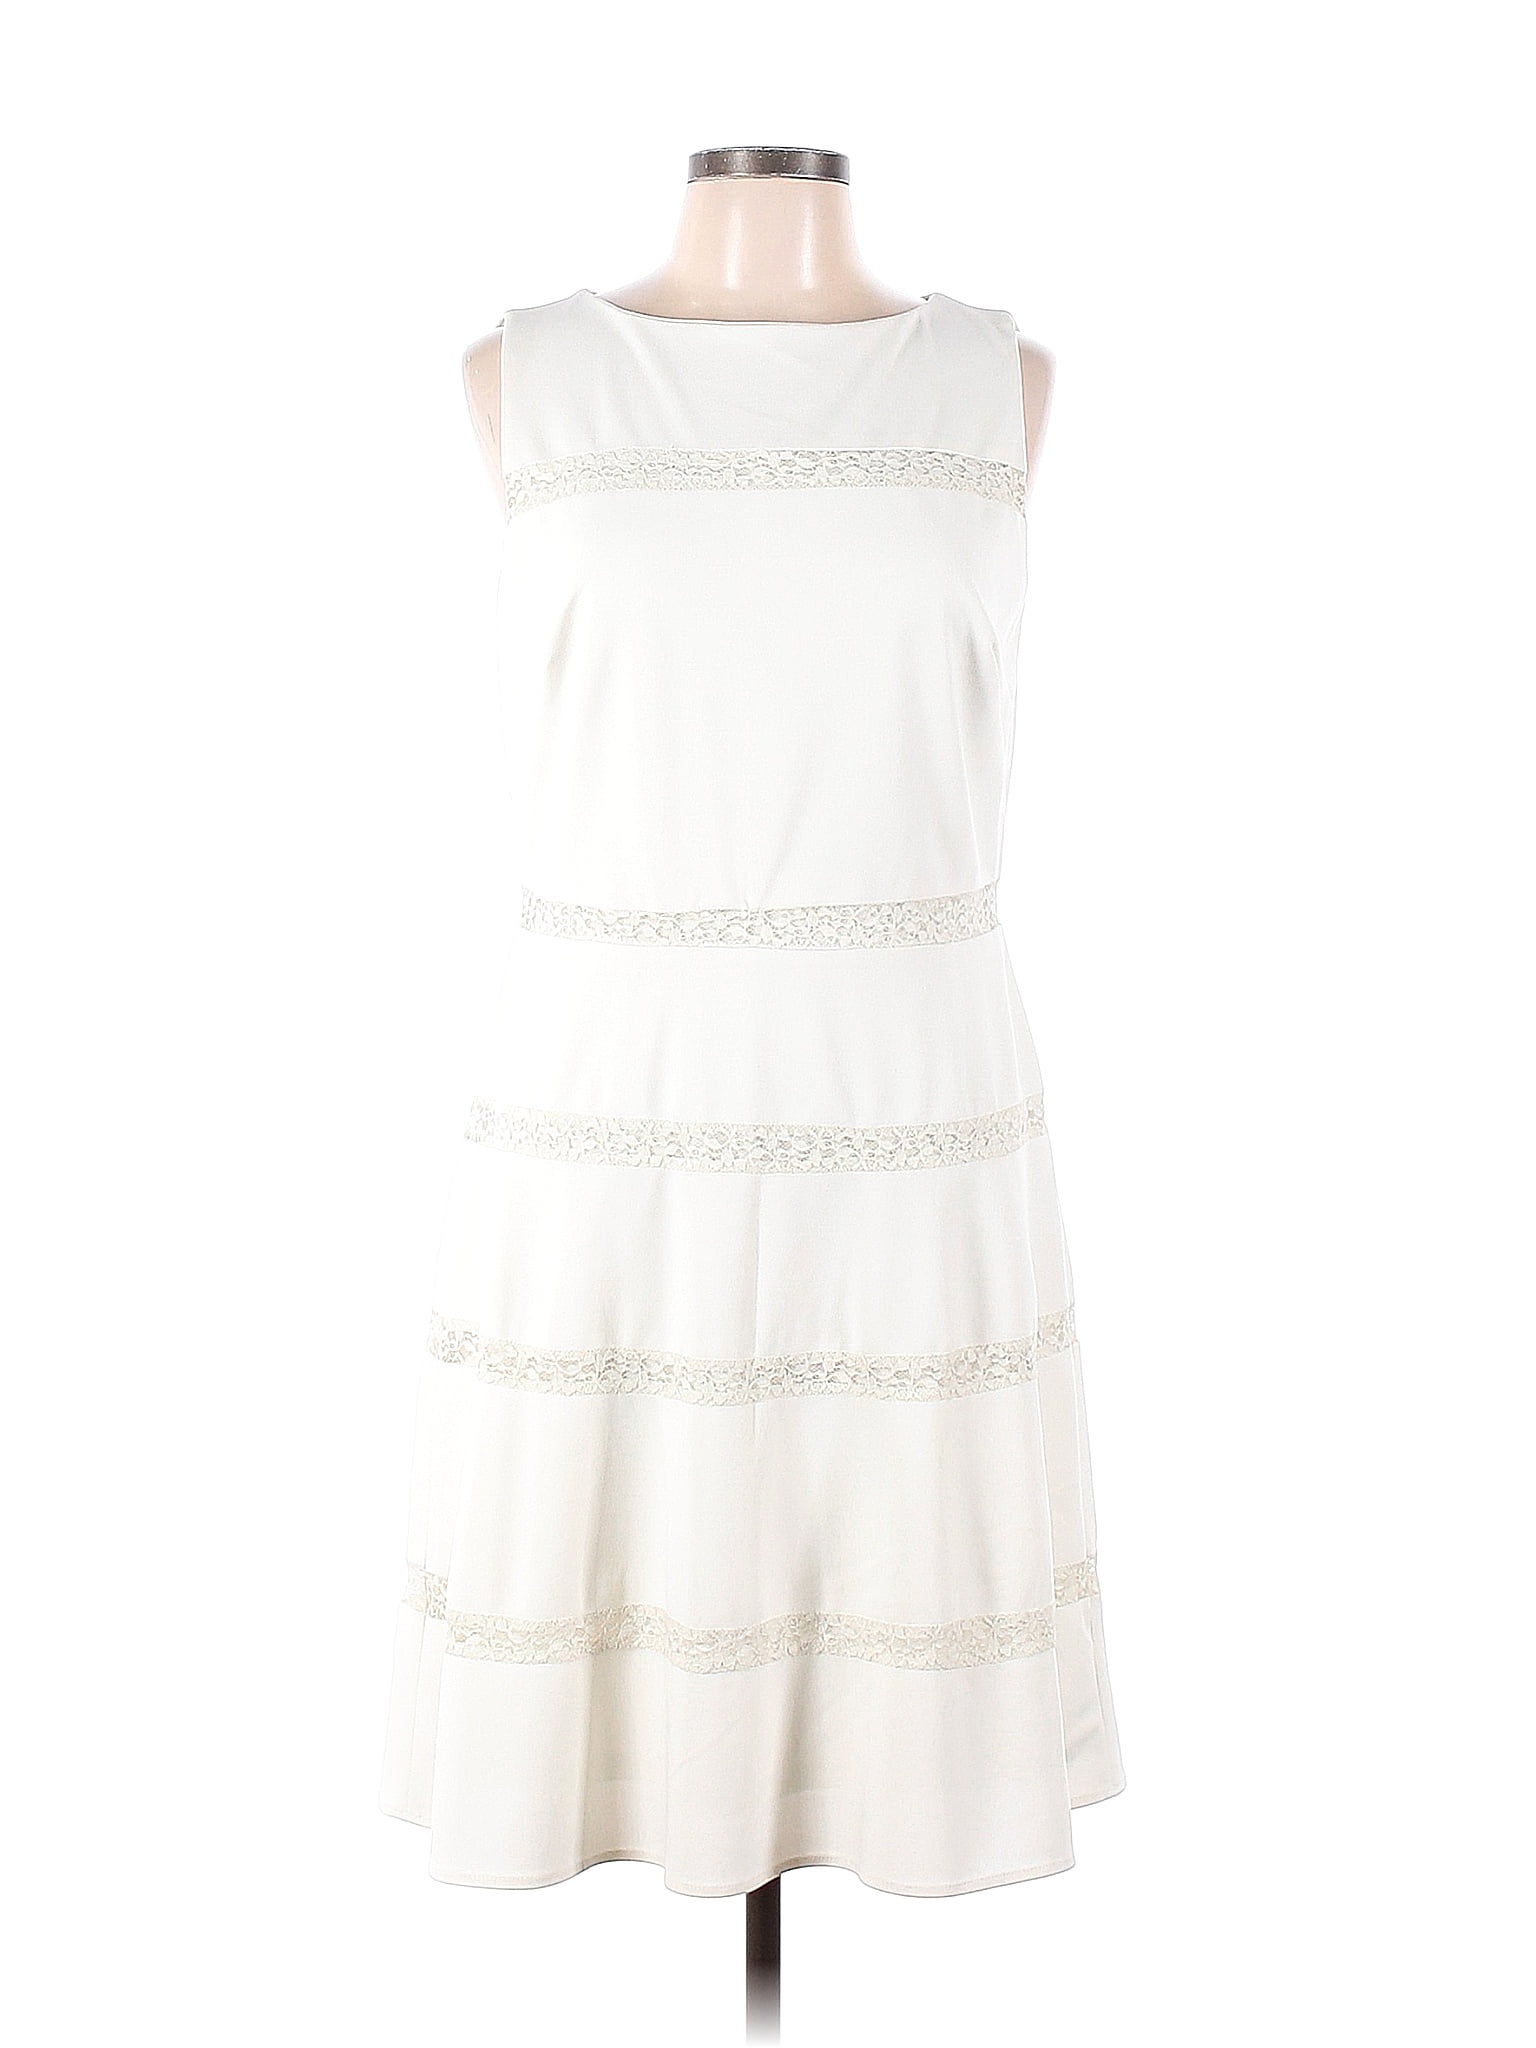 Lauren by Ralph Lauren White Marielle Dress Size 12 - 72% off | thredUP